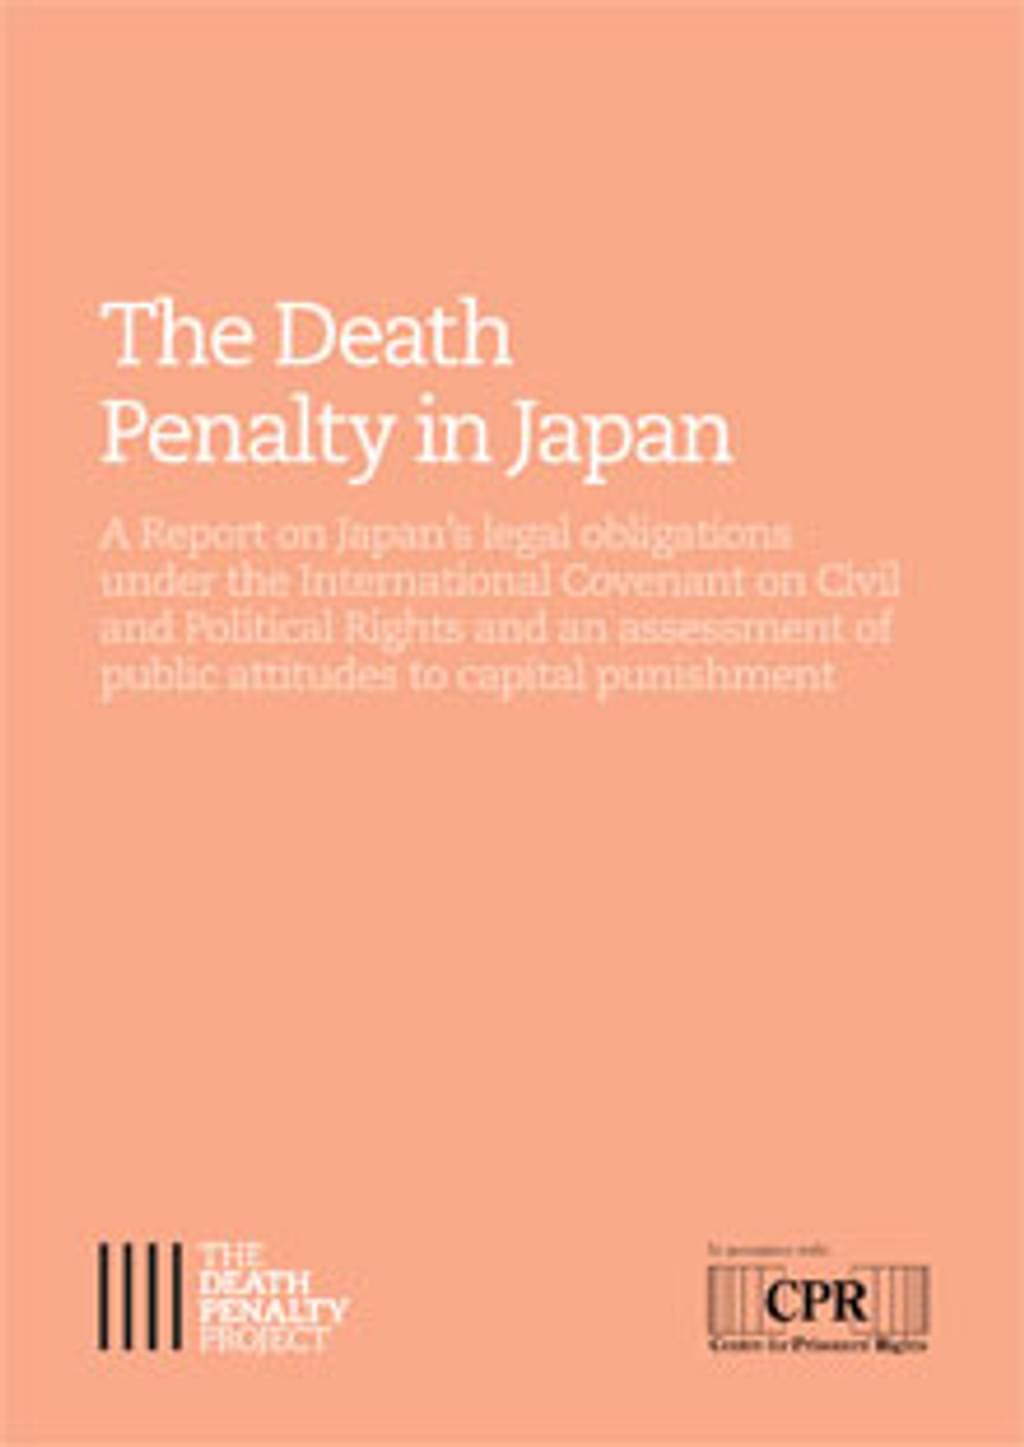 STUDIES: "The Death Penalty in Japan"